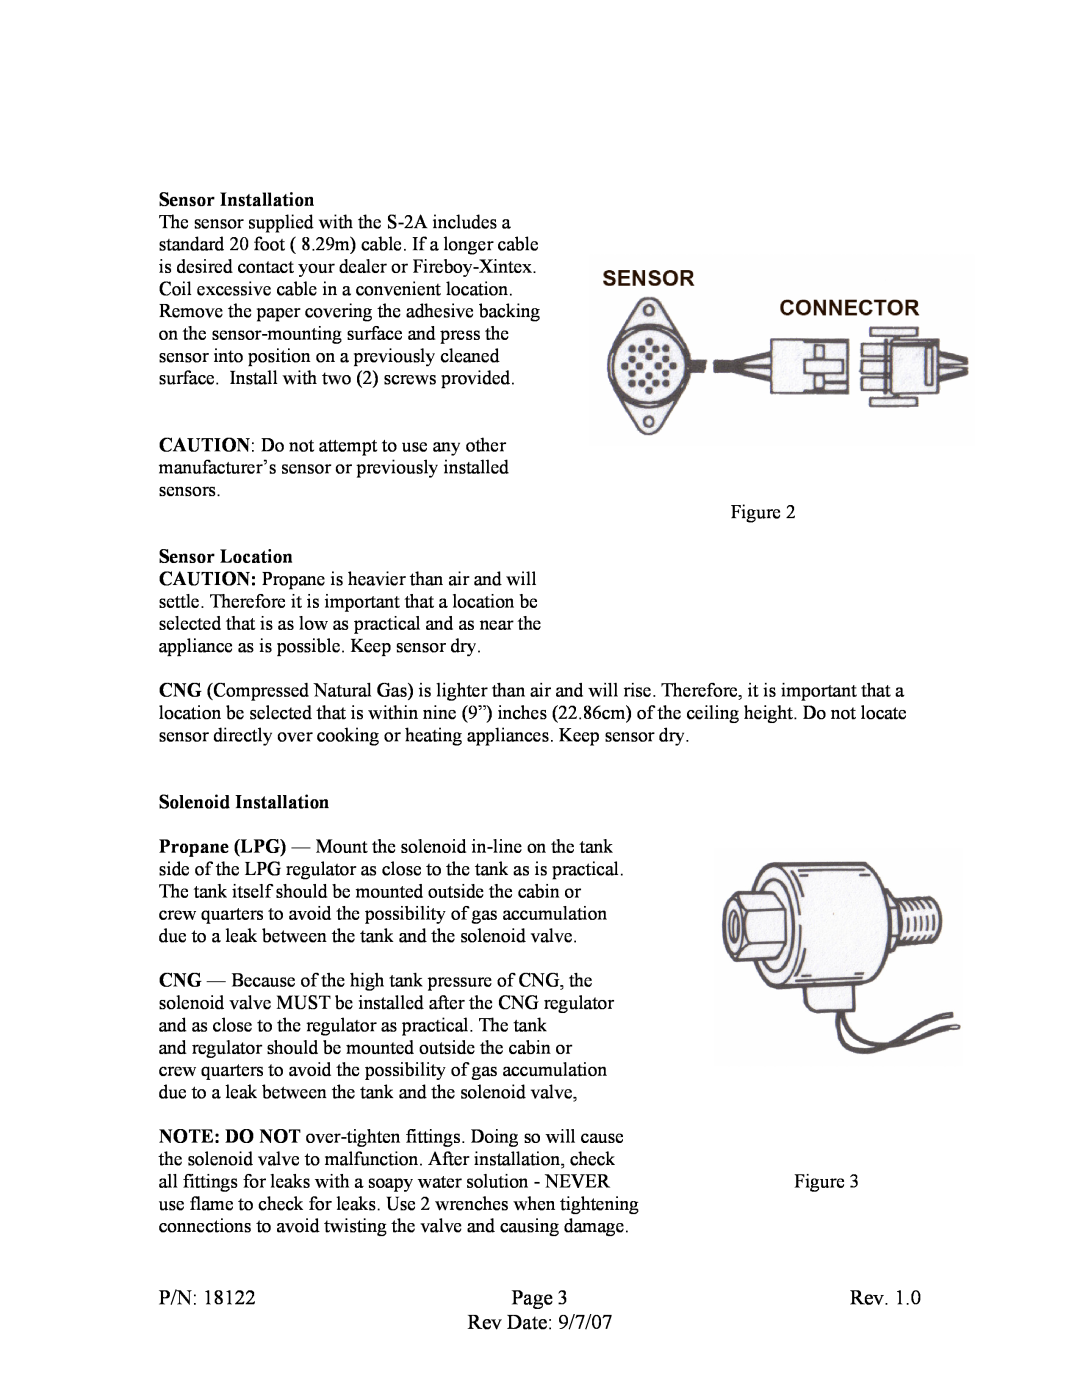 Fireboy- Xintex, LTD S-2A Sensor Installation, Sensor Location, Solenoid Installation, P/N, Page, Rev Date 9/7/07 